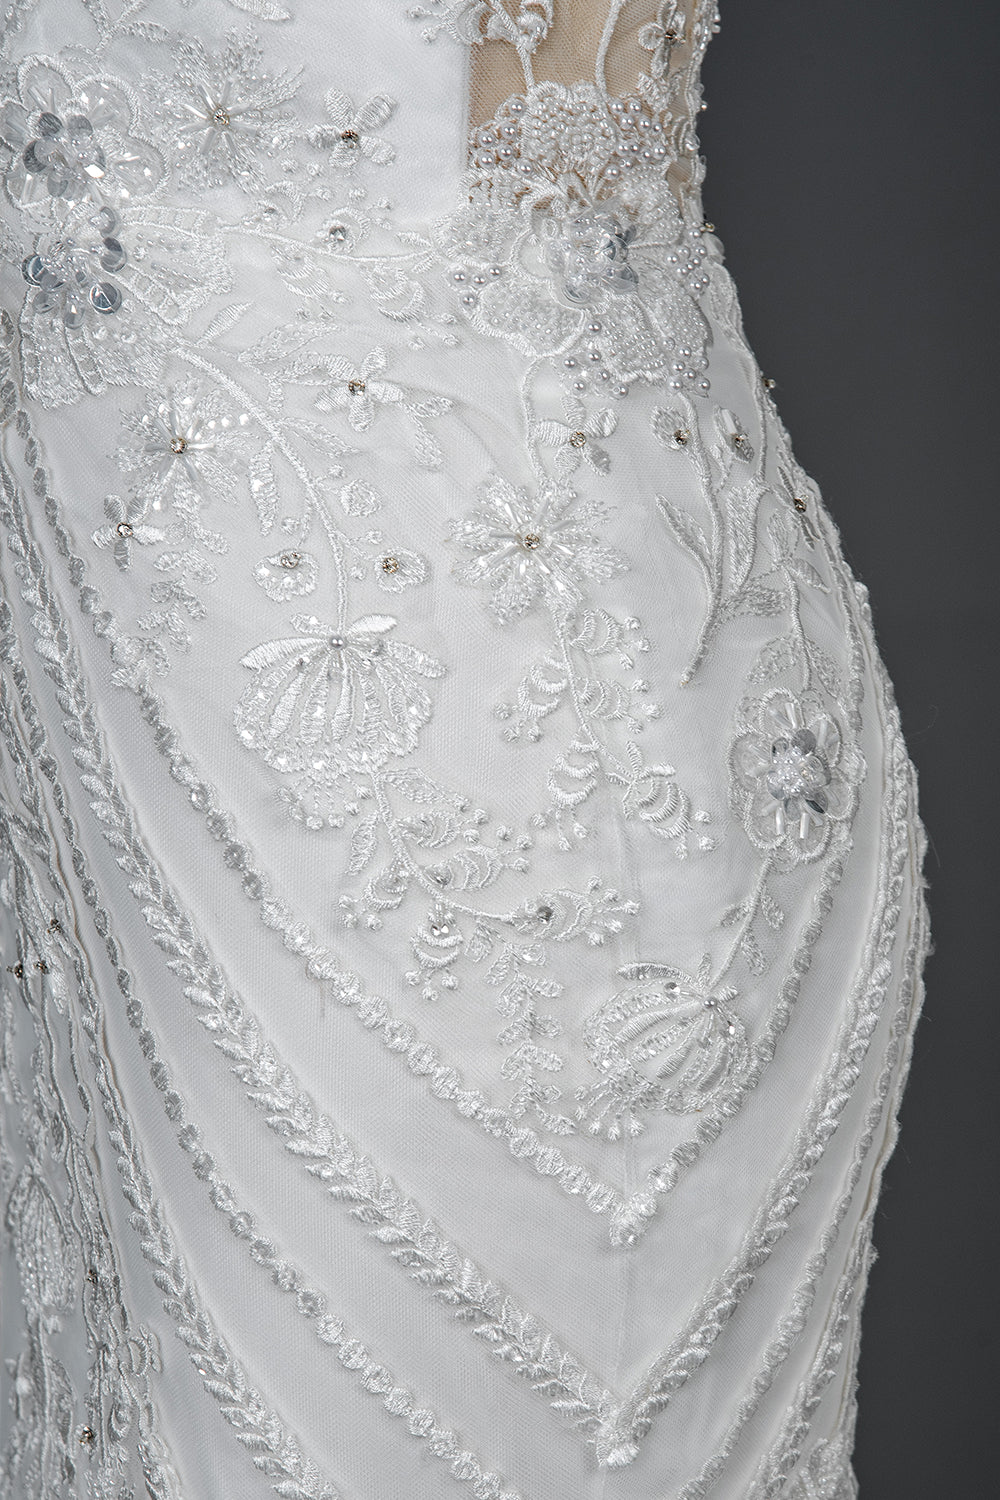 Mermaid Scoop Jewel Wedding Dress with Beadings Appliques-Wedding Dresses-BallBride